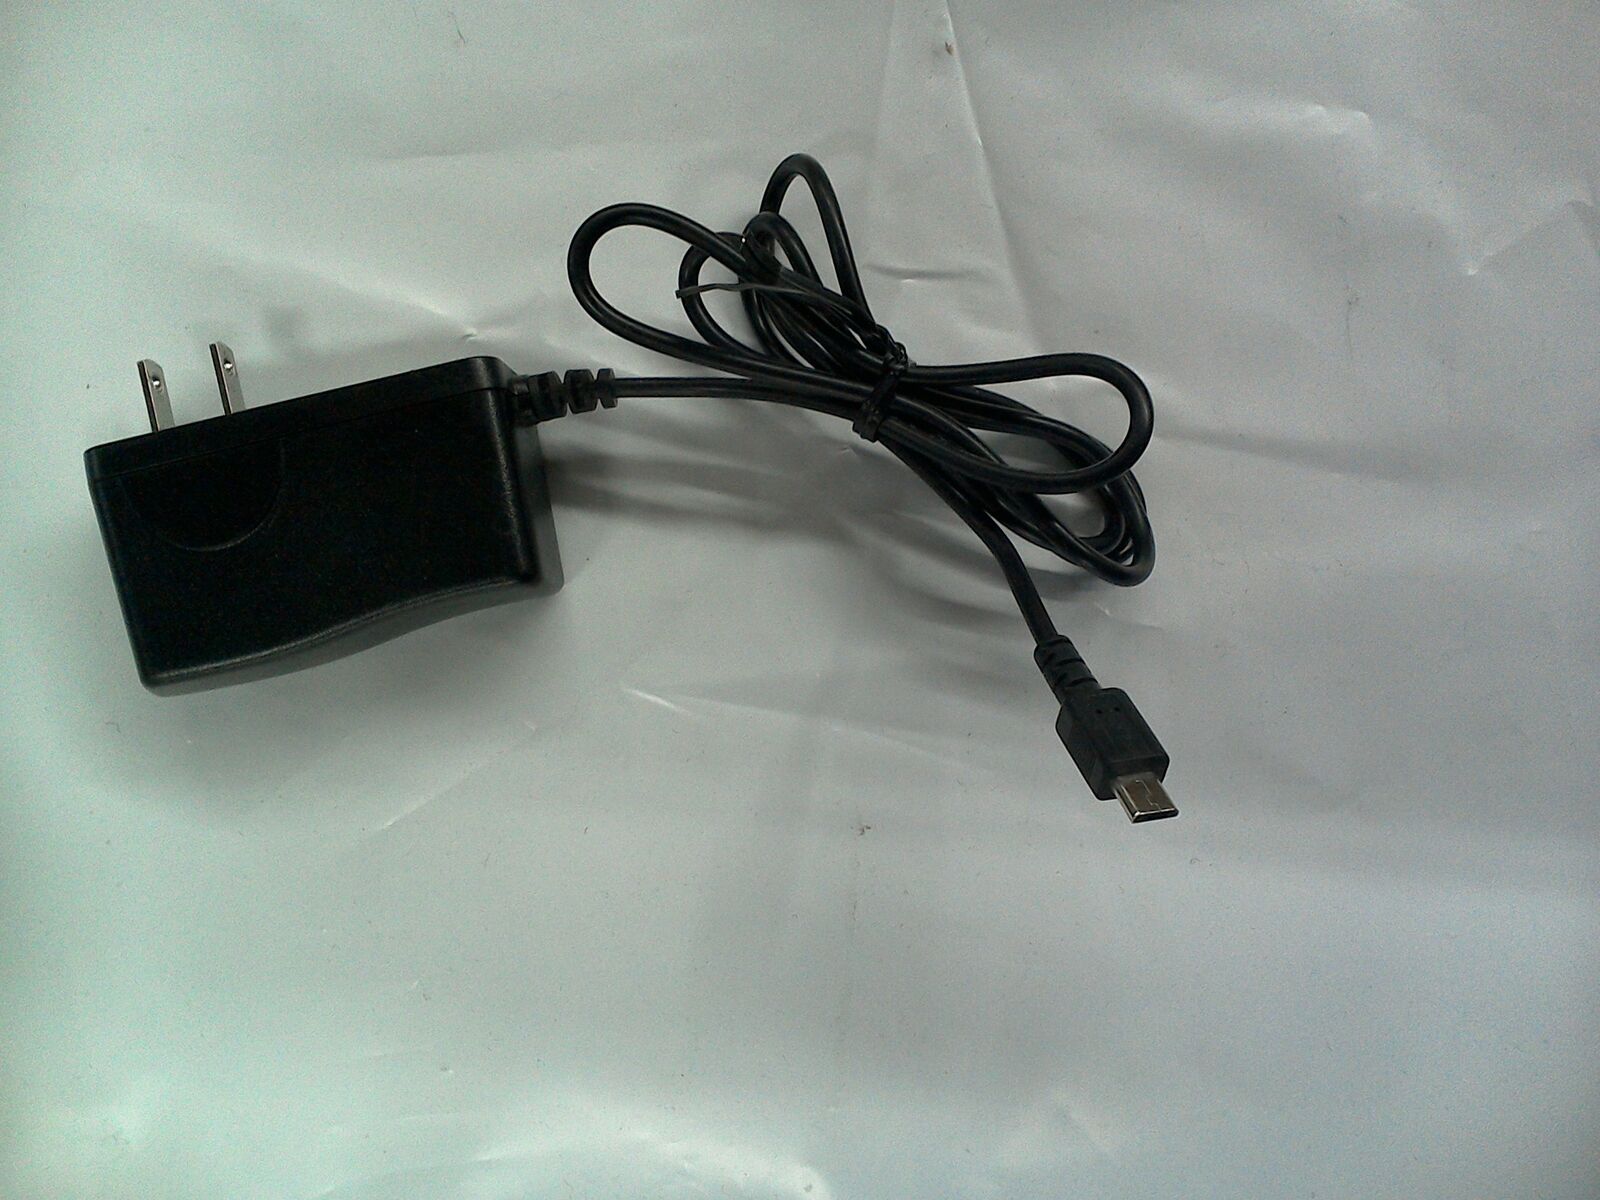 Original Dokocom STC-A0502000-Z (VERSION 2) Tablet Power Adapter Cable Co Brand: Dokocom Type: P